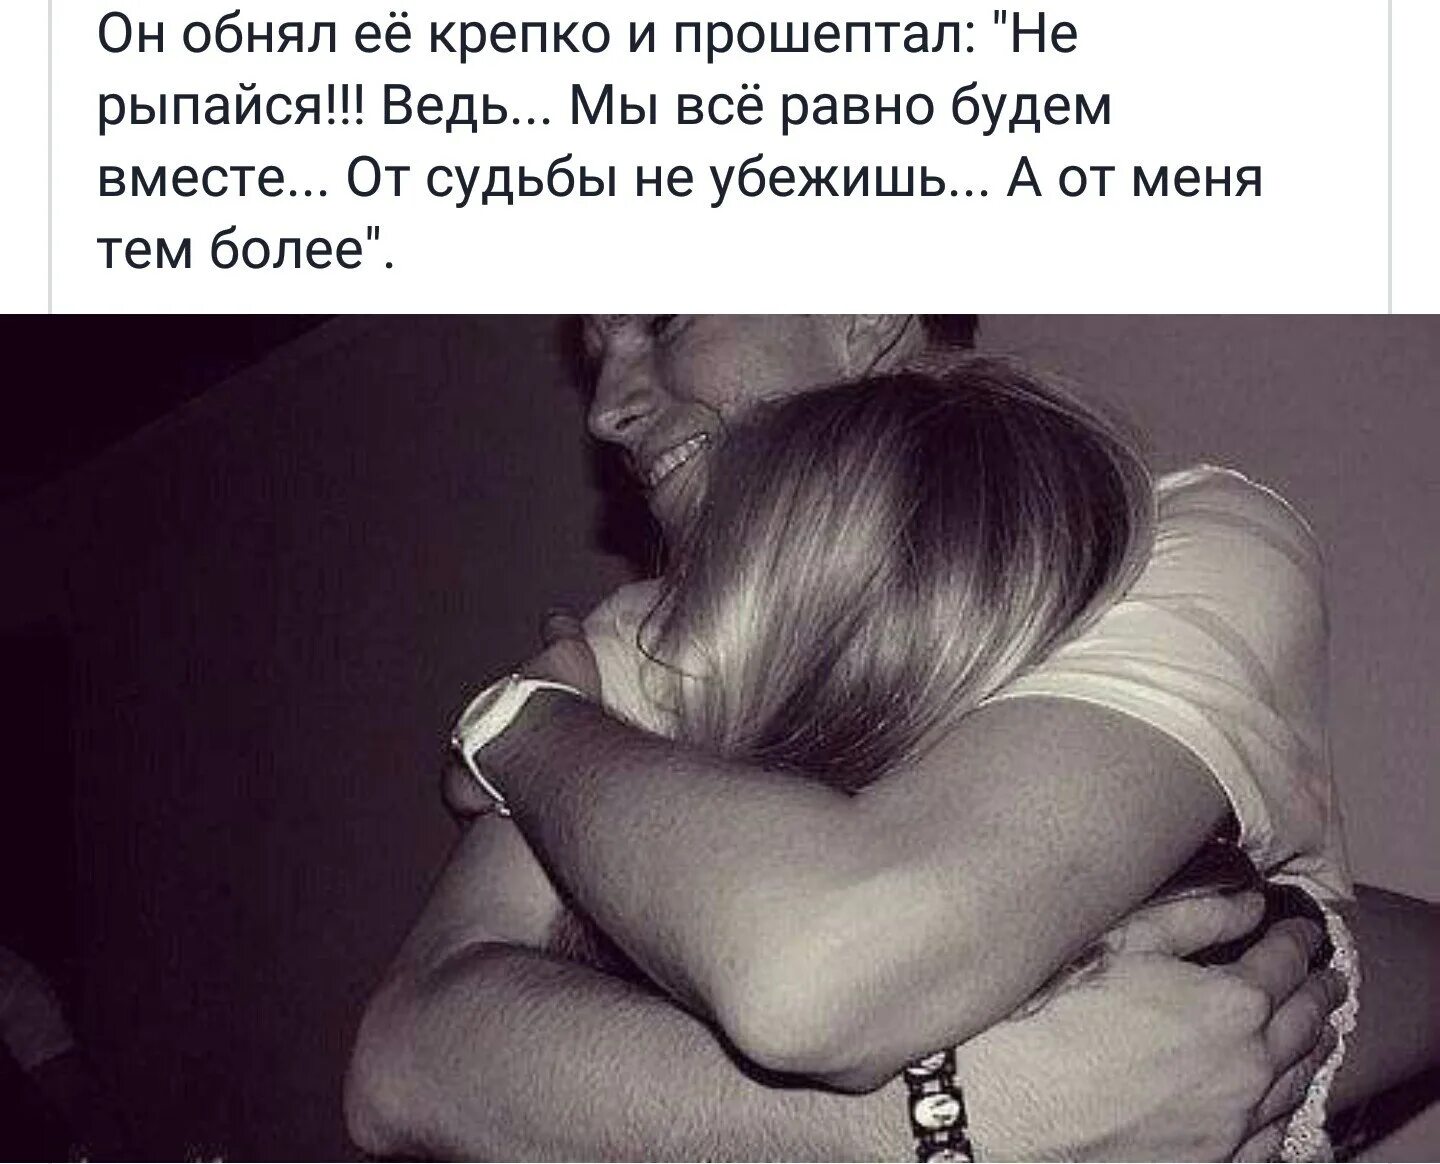 Обними меня на русском языке. Крепкие объятия. Обнимаю крепко. Мужчина крепко обнимает женщину. Крепко обнимает девушку.